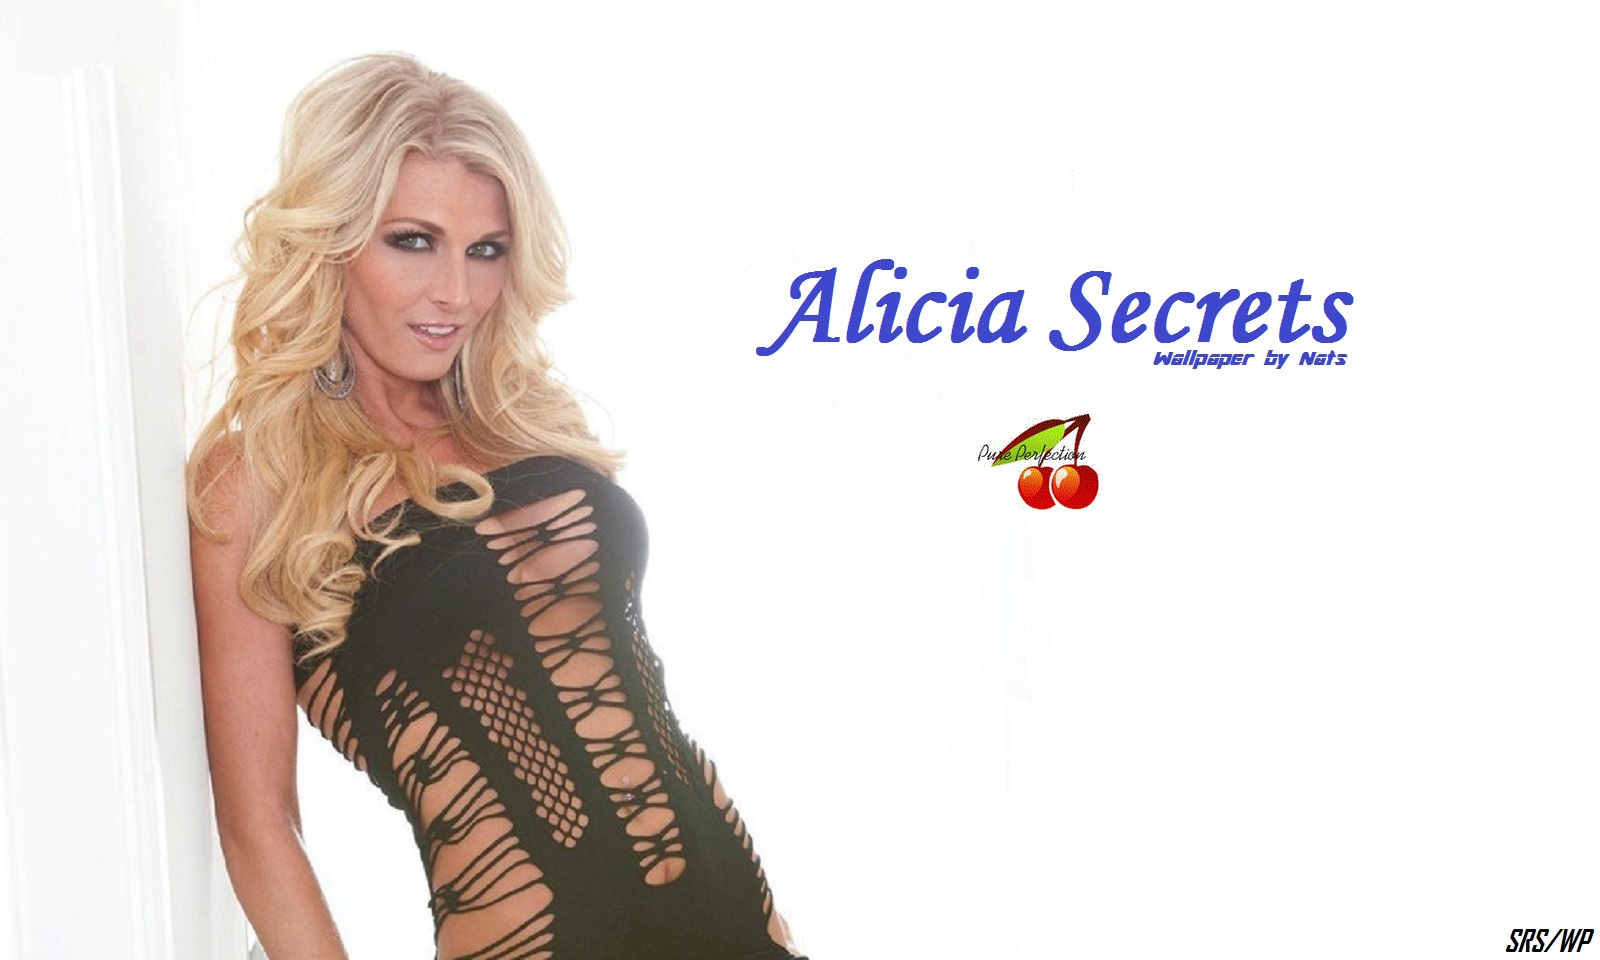 alicia-secrets_cd5f9d3d.jpg